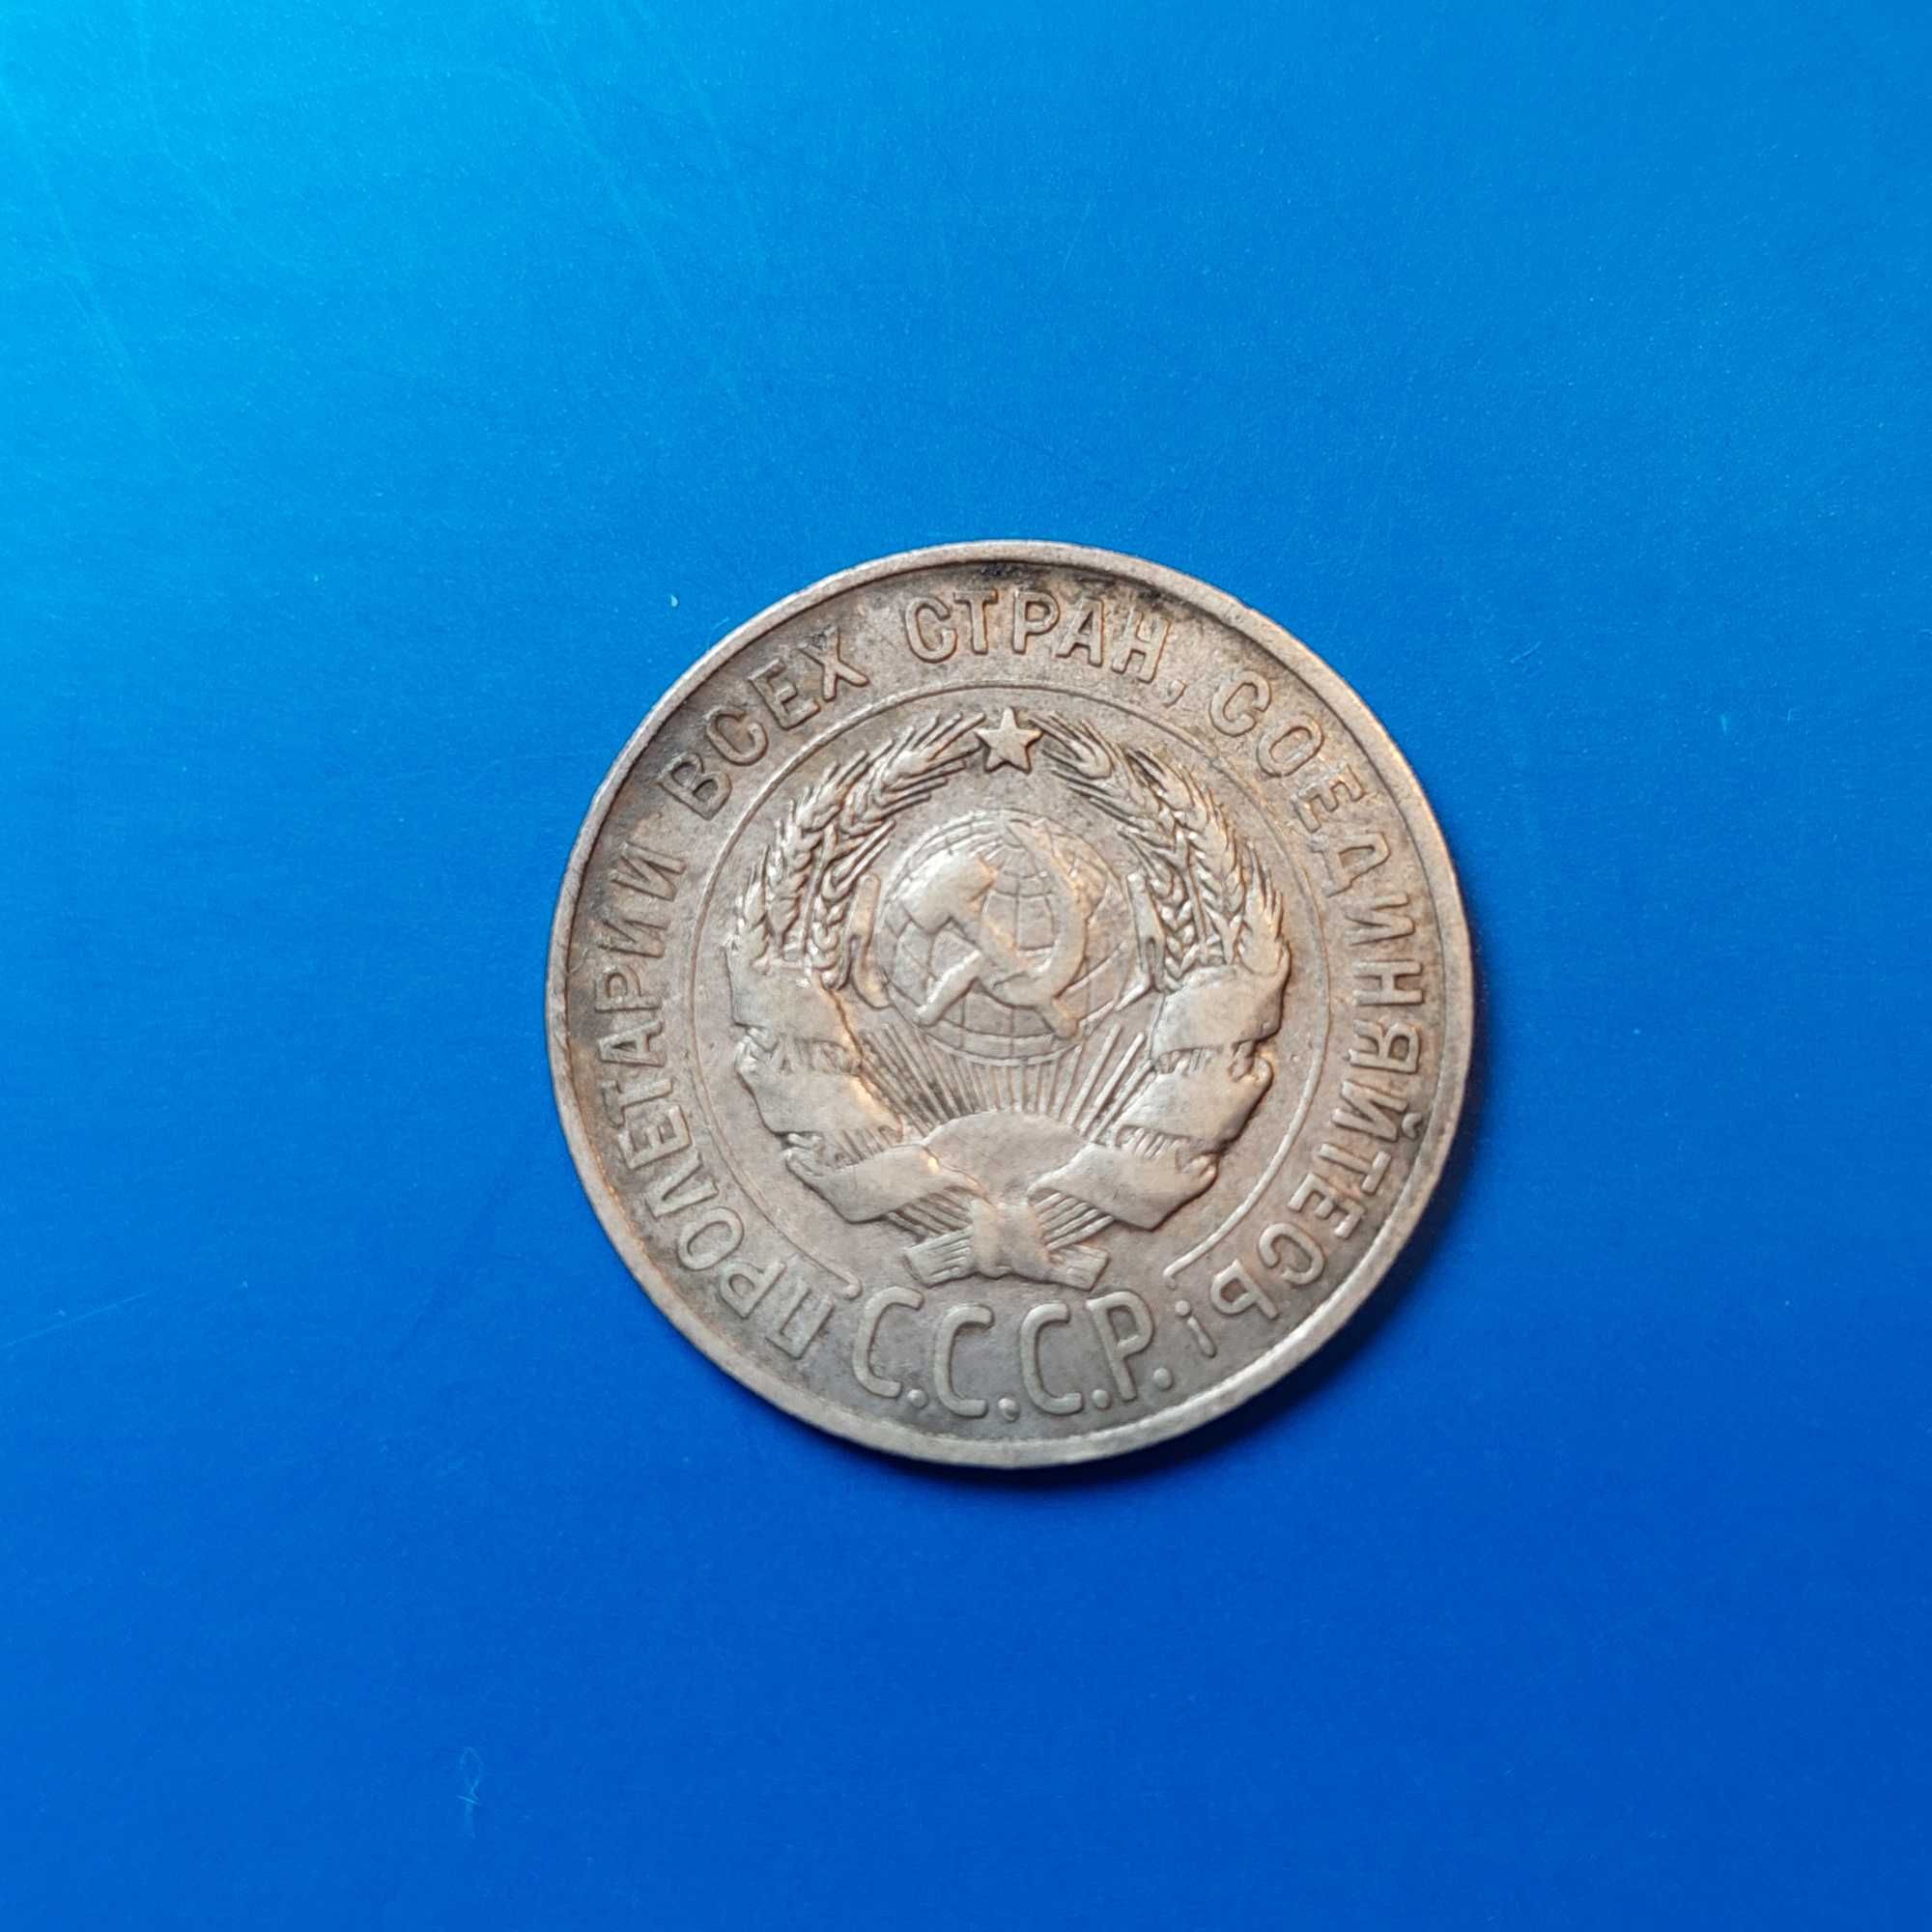 20 копеек 1928 год серебряная монета